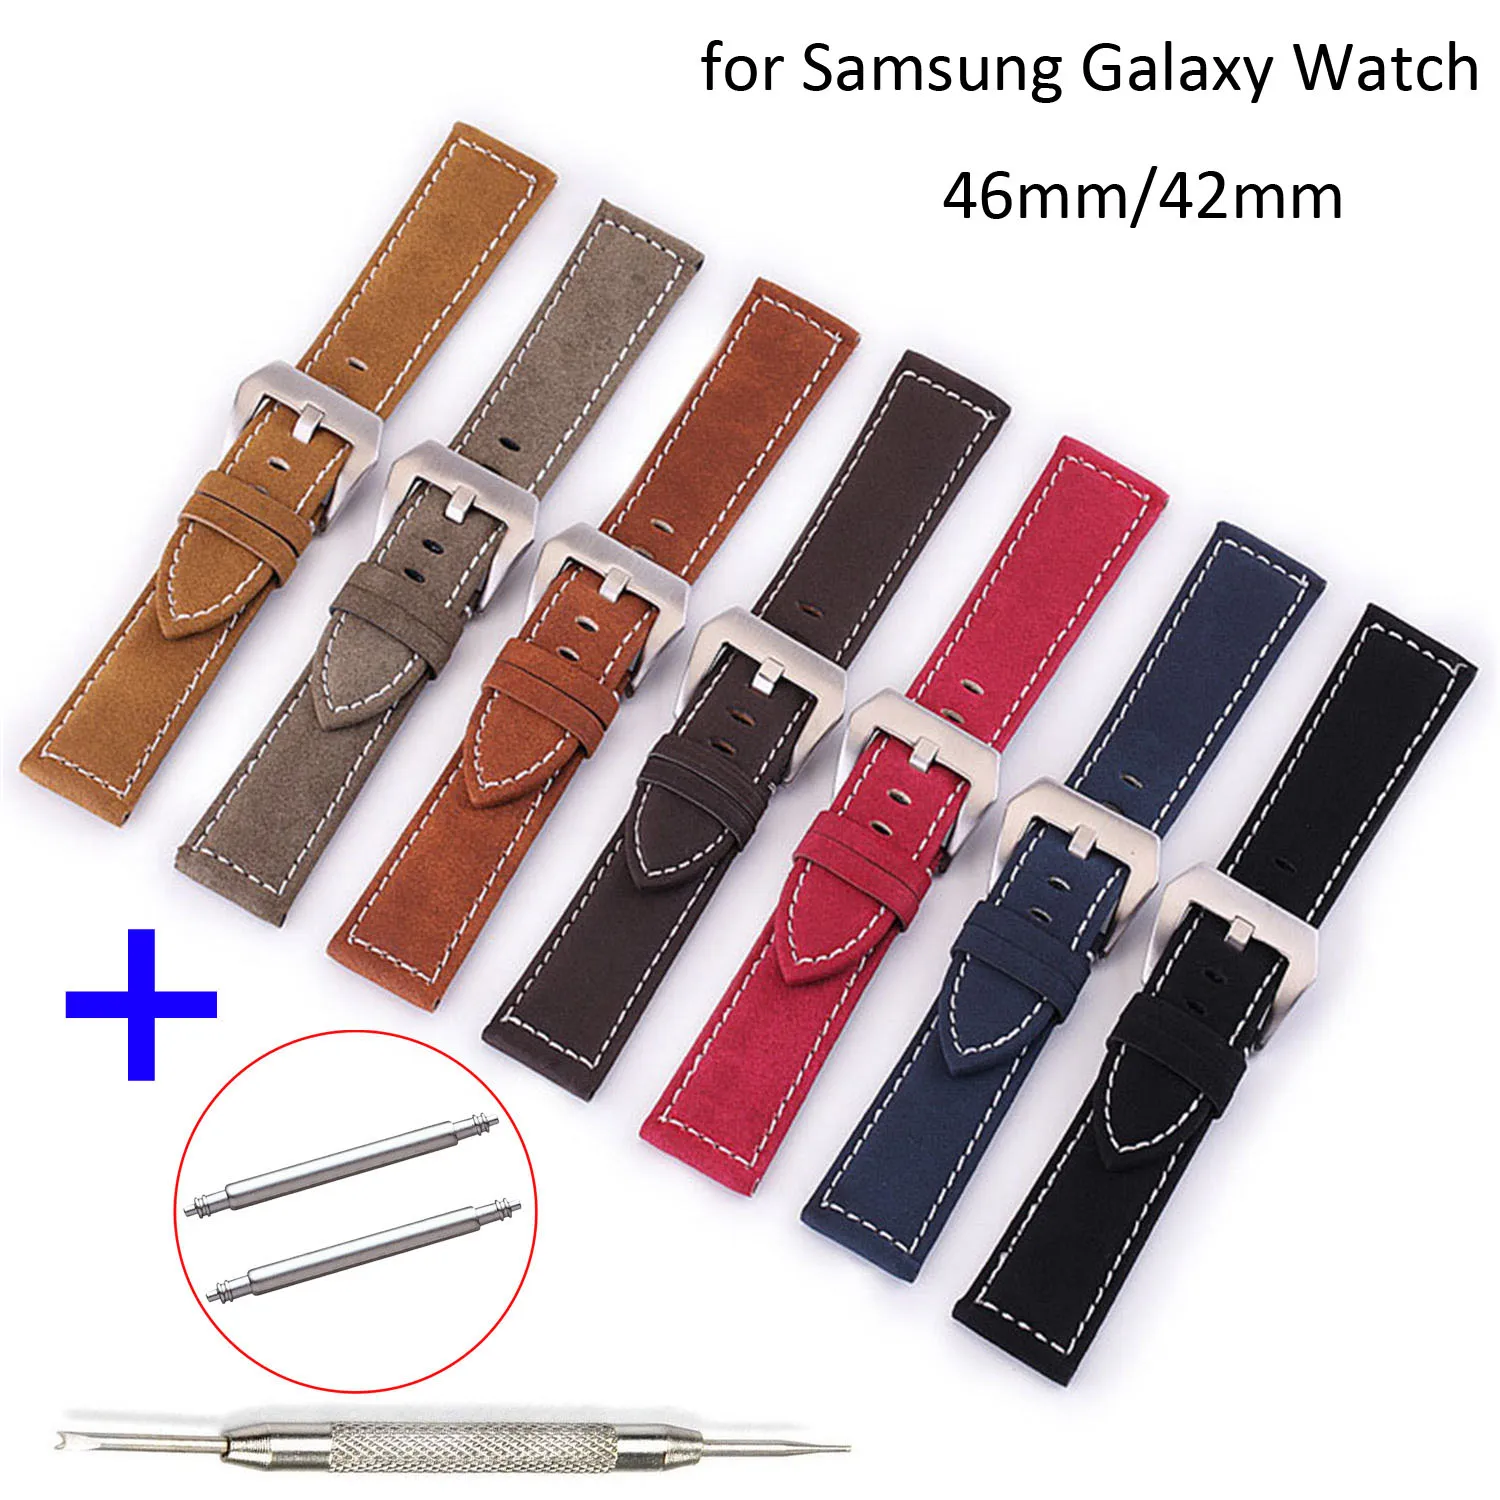 

Retro Style Genuine Leather Watchband 20mm 22mm for Samsung Galaxy Watch 42mm 46mm SM-R810/R800 Band Sports Wrist Strap Bracelet